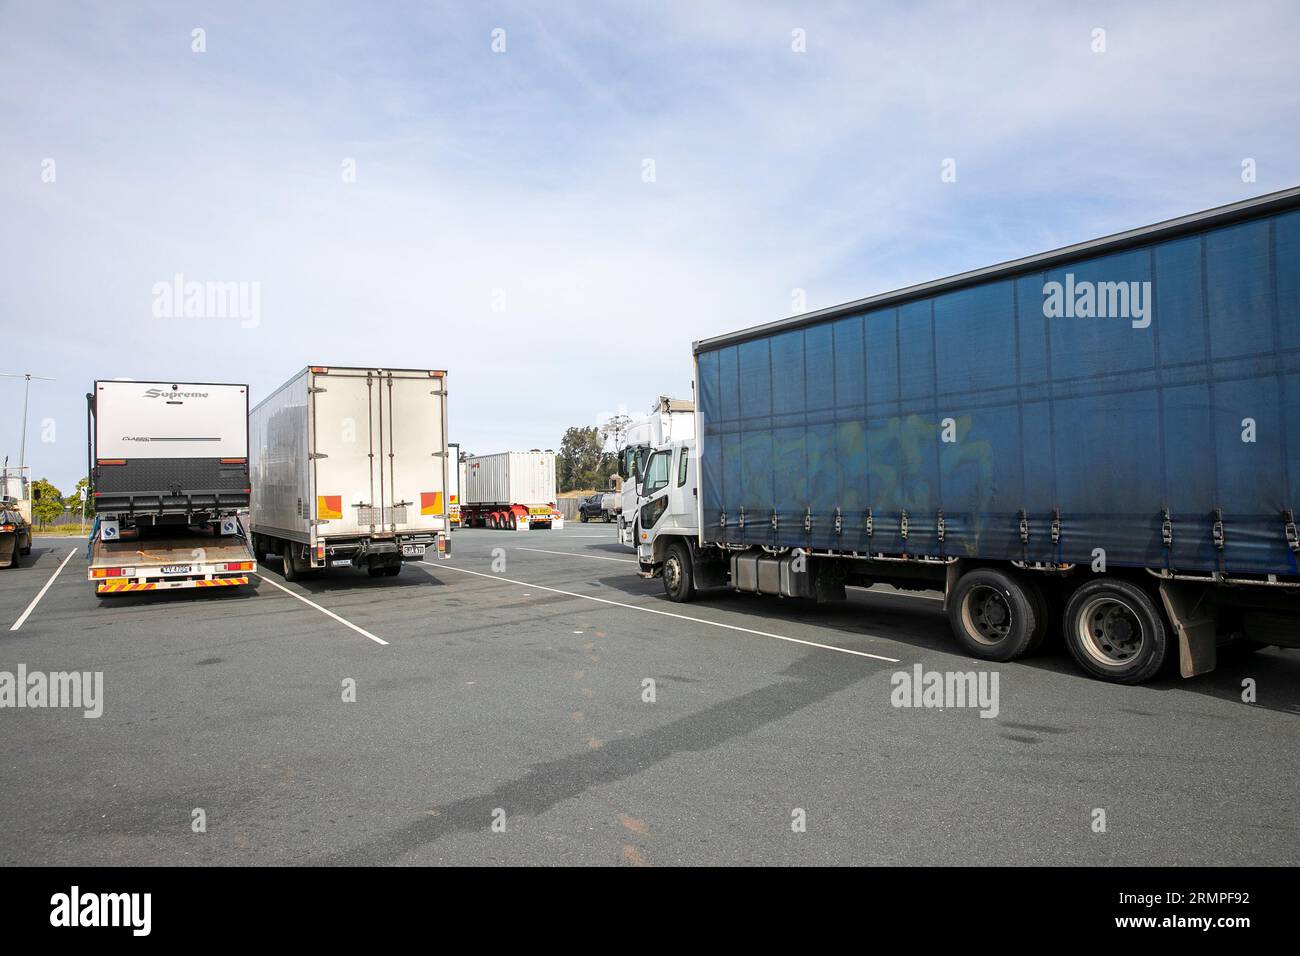 Australian freight heavy goods trucks vehicles parked near Port Macquarie in New South Wales,Australia Stock Photo